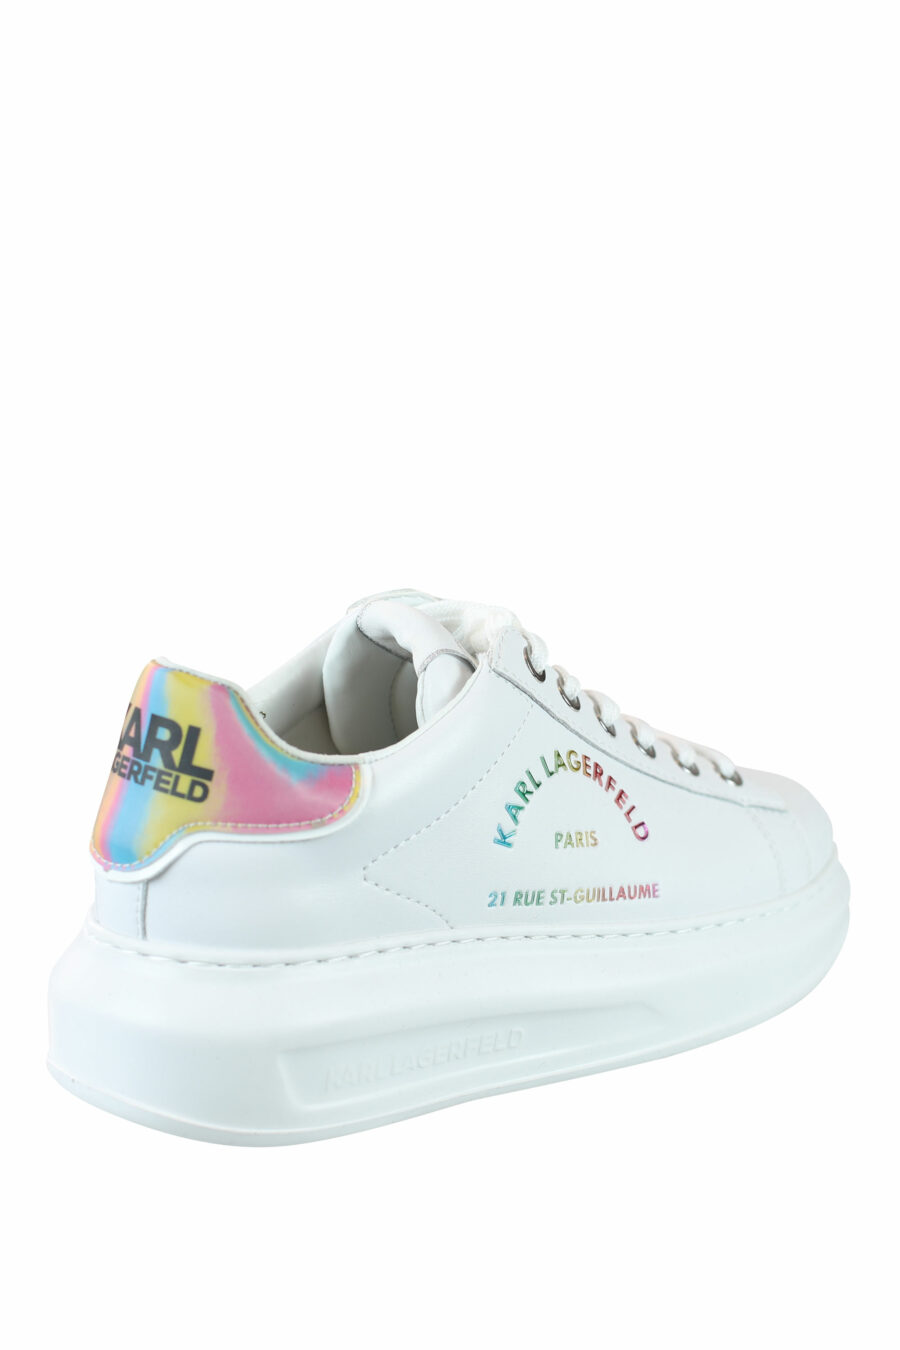 Zapatillas blancas con logo multicolor "rue st-guillaume" - IMG 0010